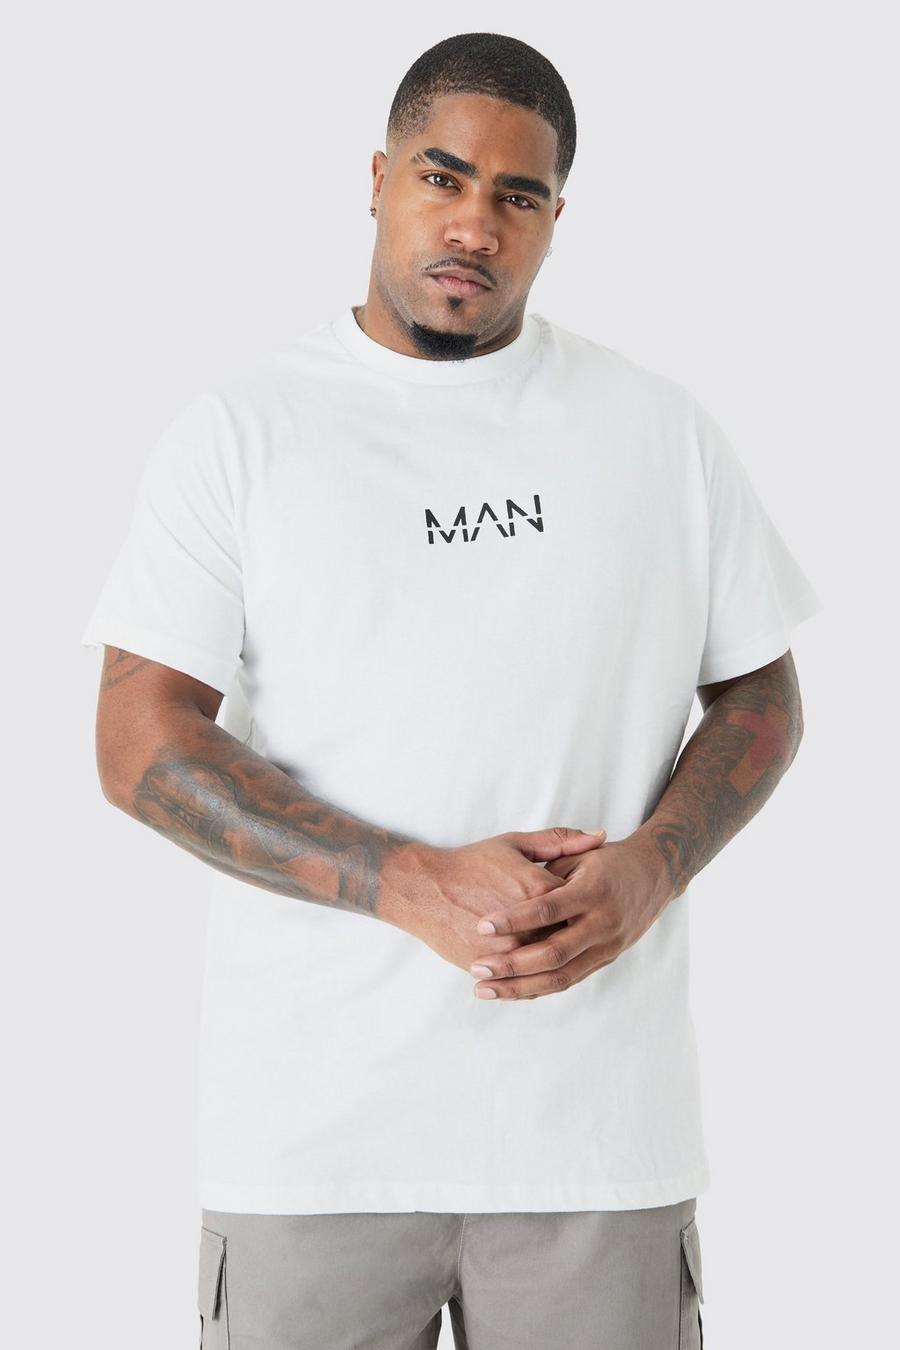 Plus T-Shirt mit Original Man-Print, White